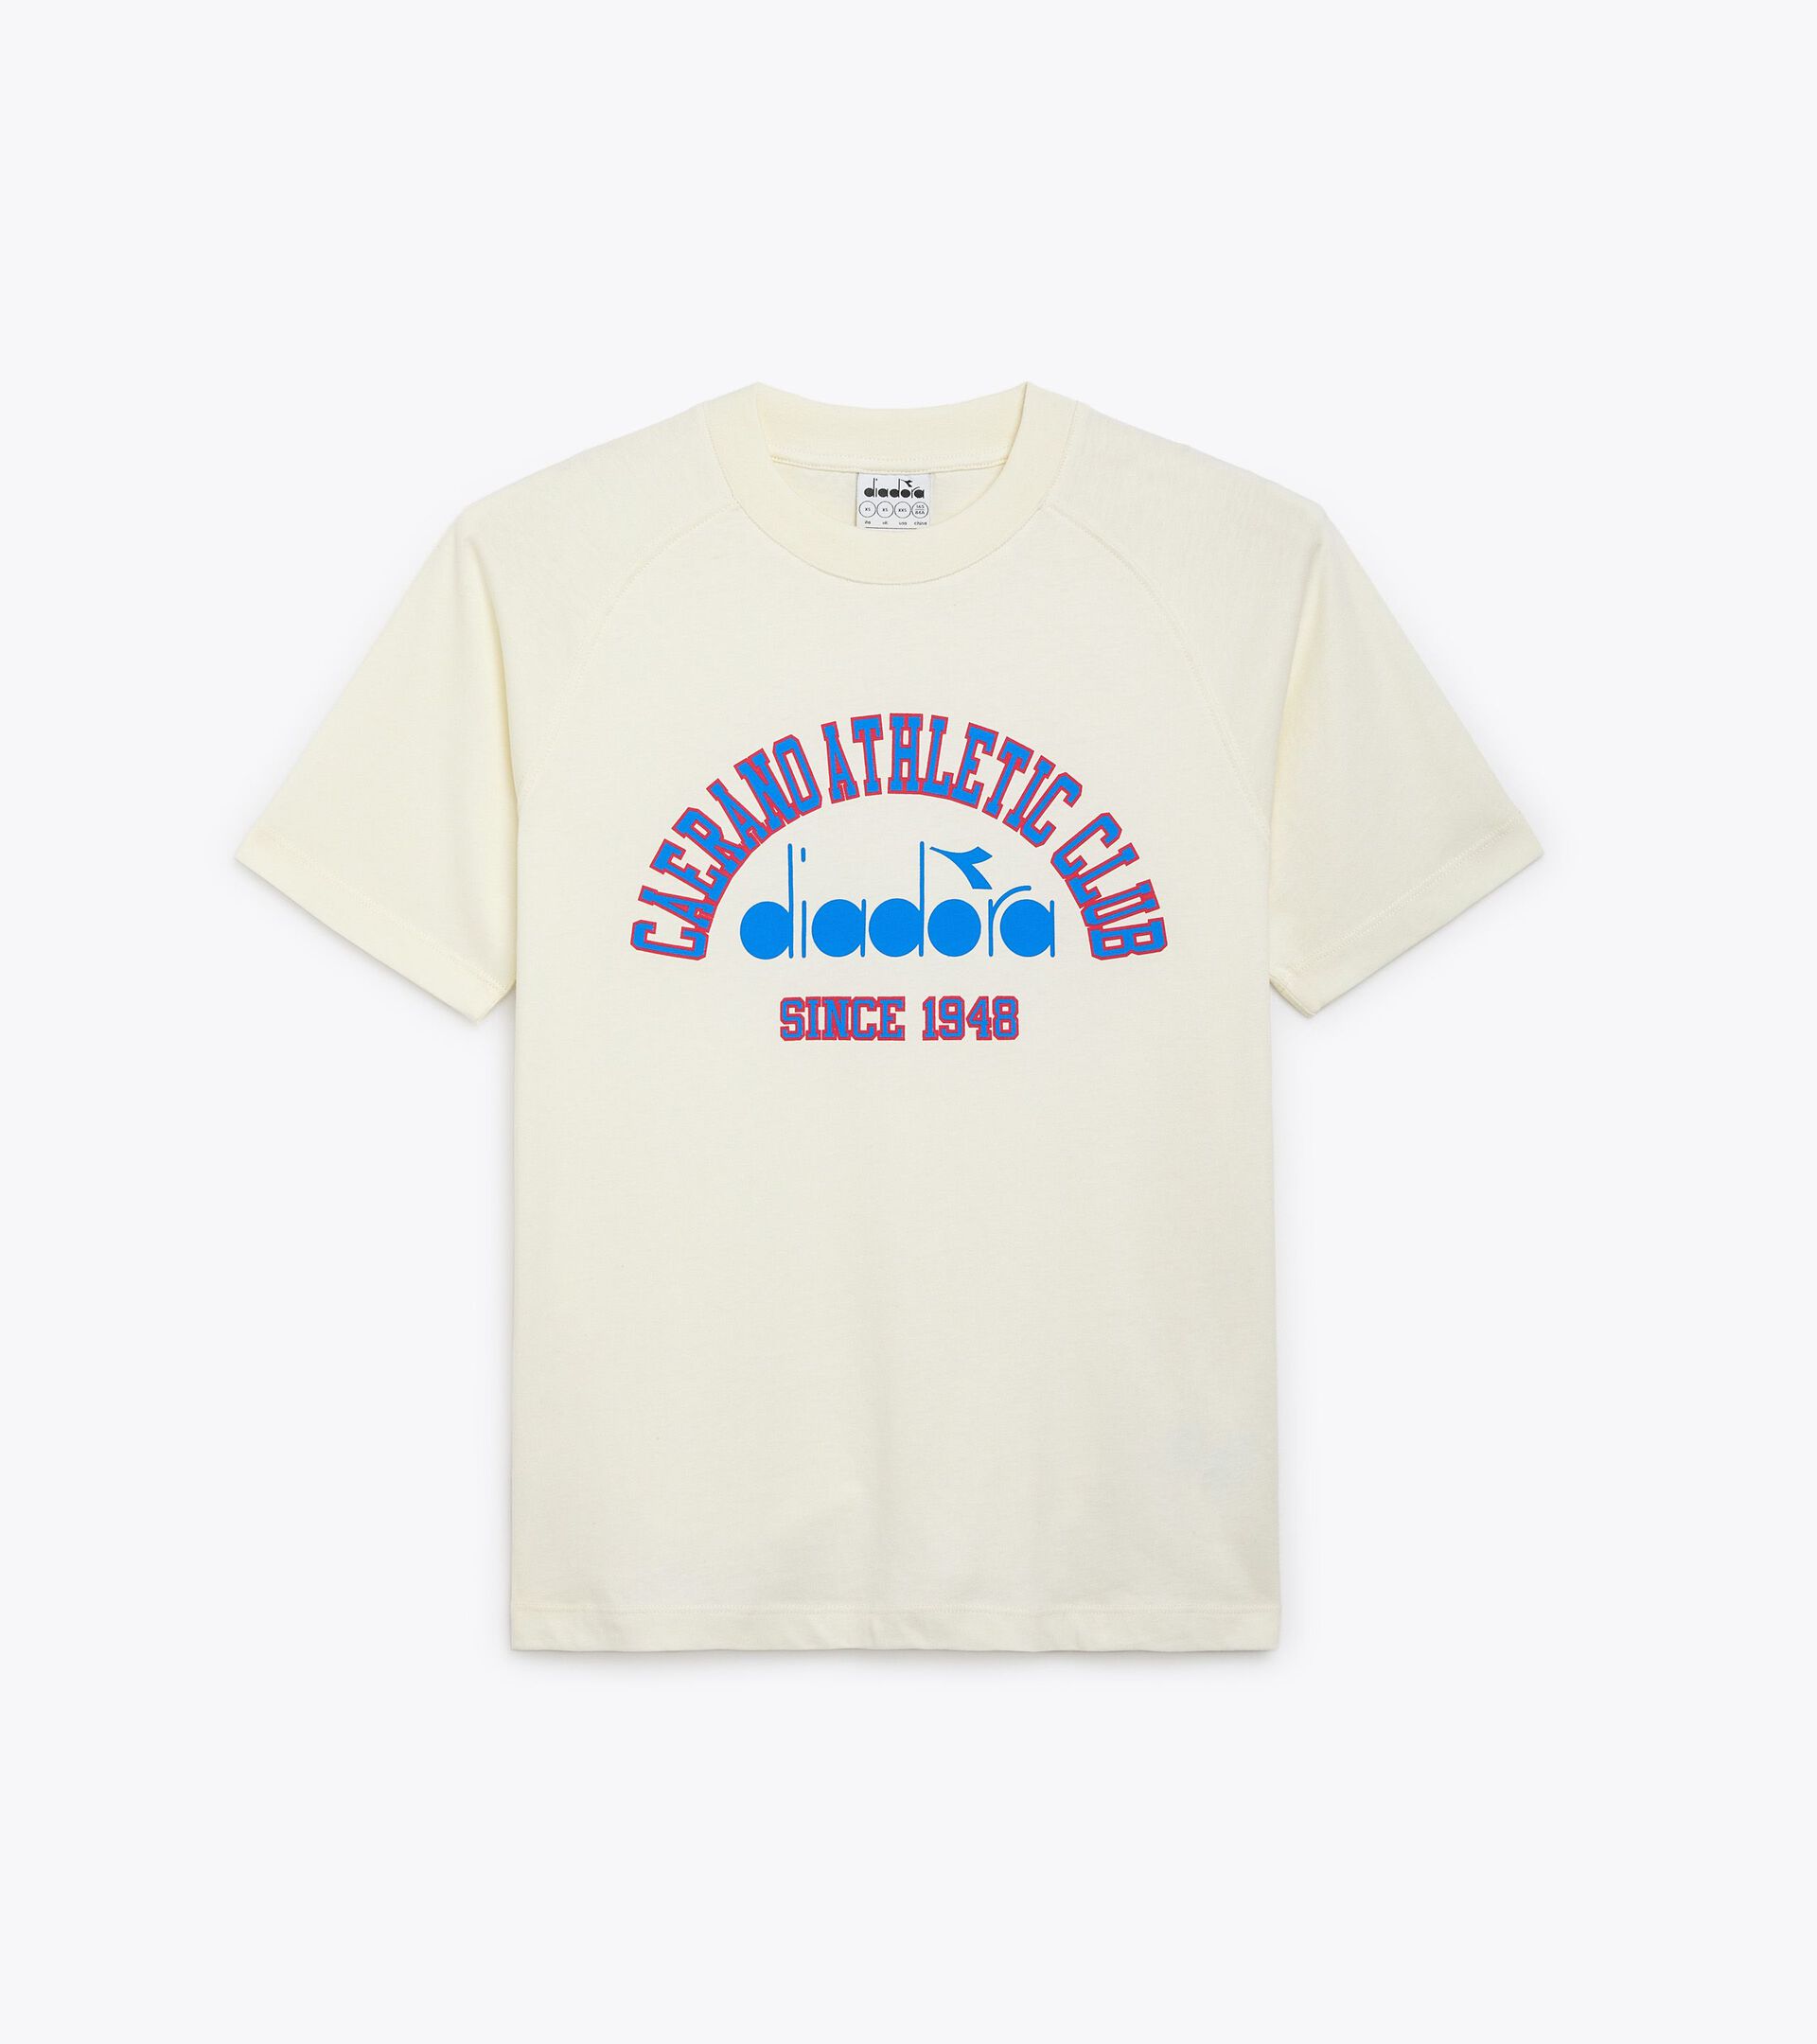 Camiseta deportiva - Gender neutral T-SHIRT SS 1948 ATHL. CLUB BLANCA VAINILLA HIELO - Diadora